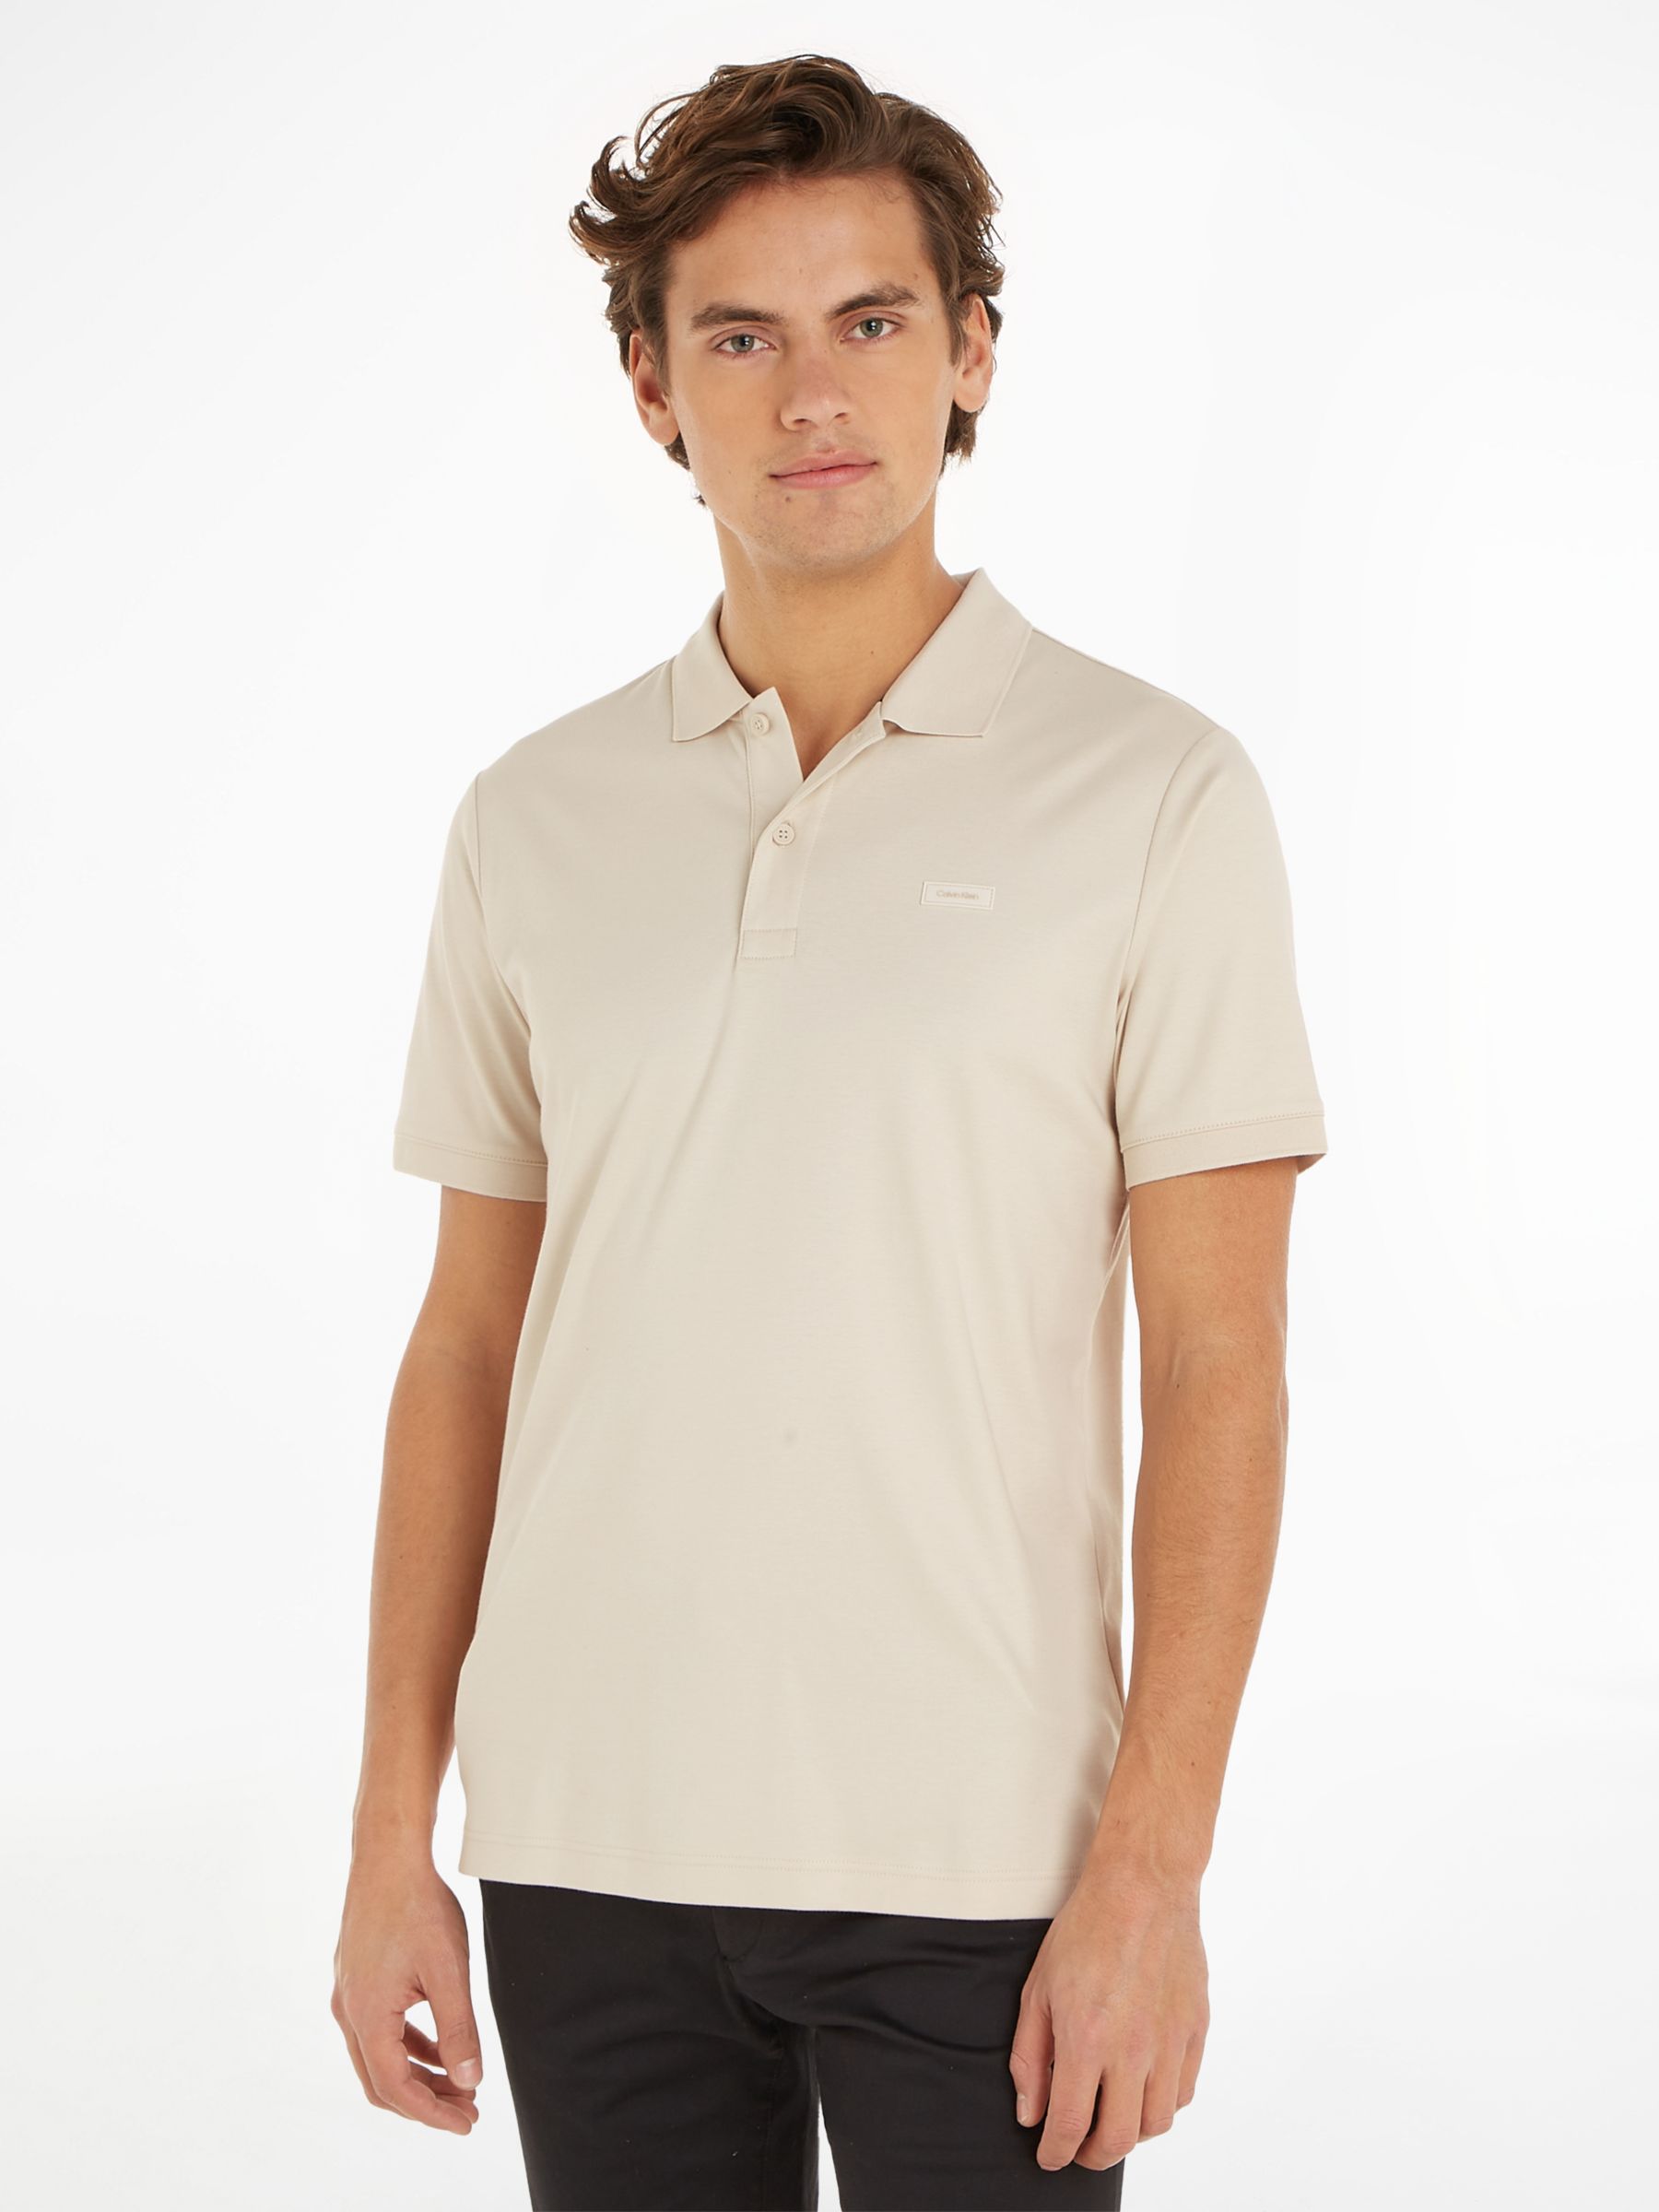 Calvin Klein Slim Fit Polo Shirt, Stony Beige at John Lewis & Partners